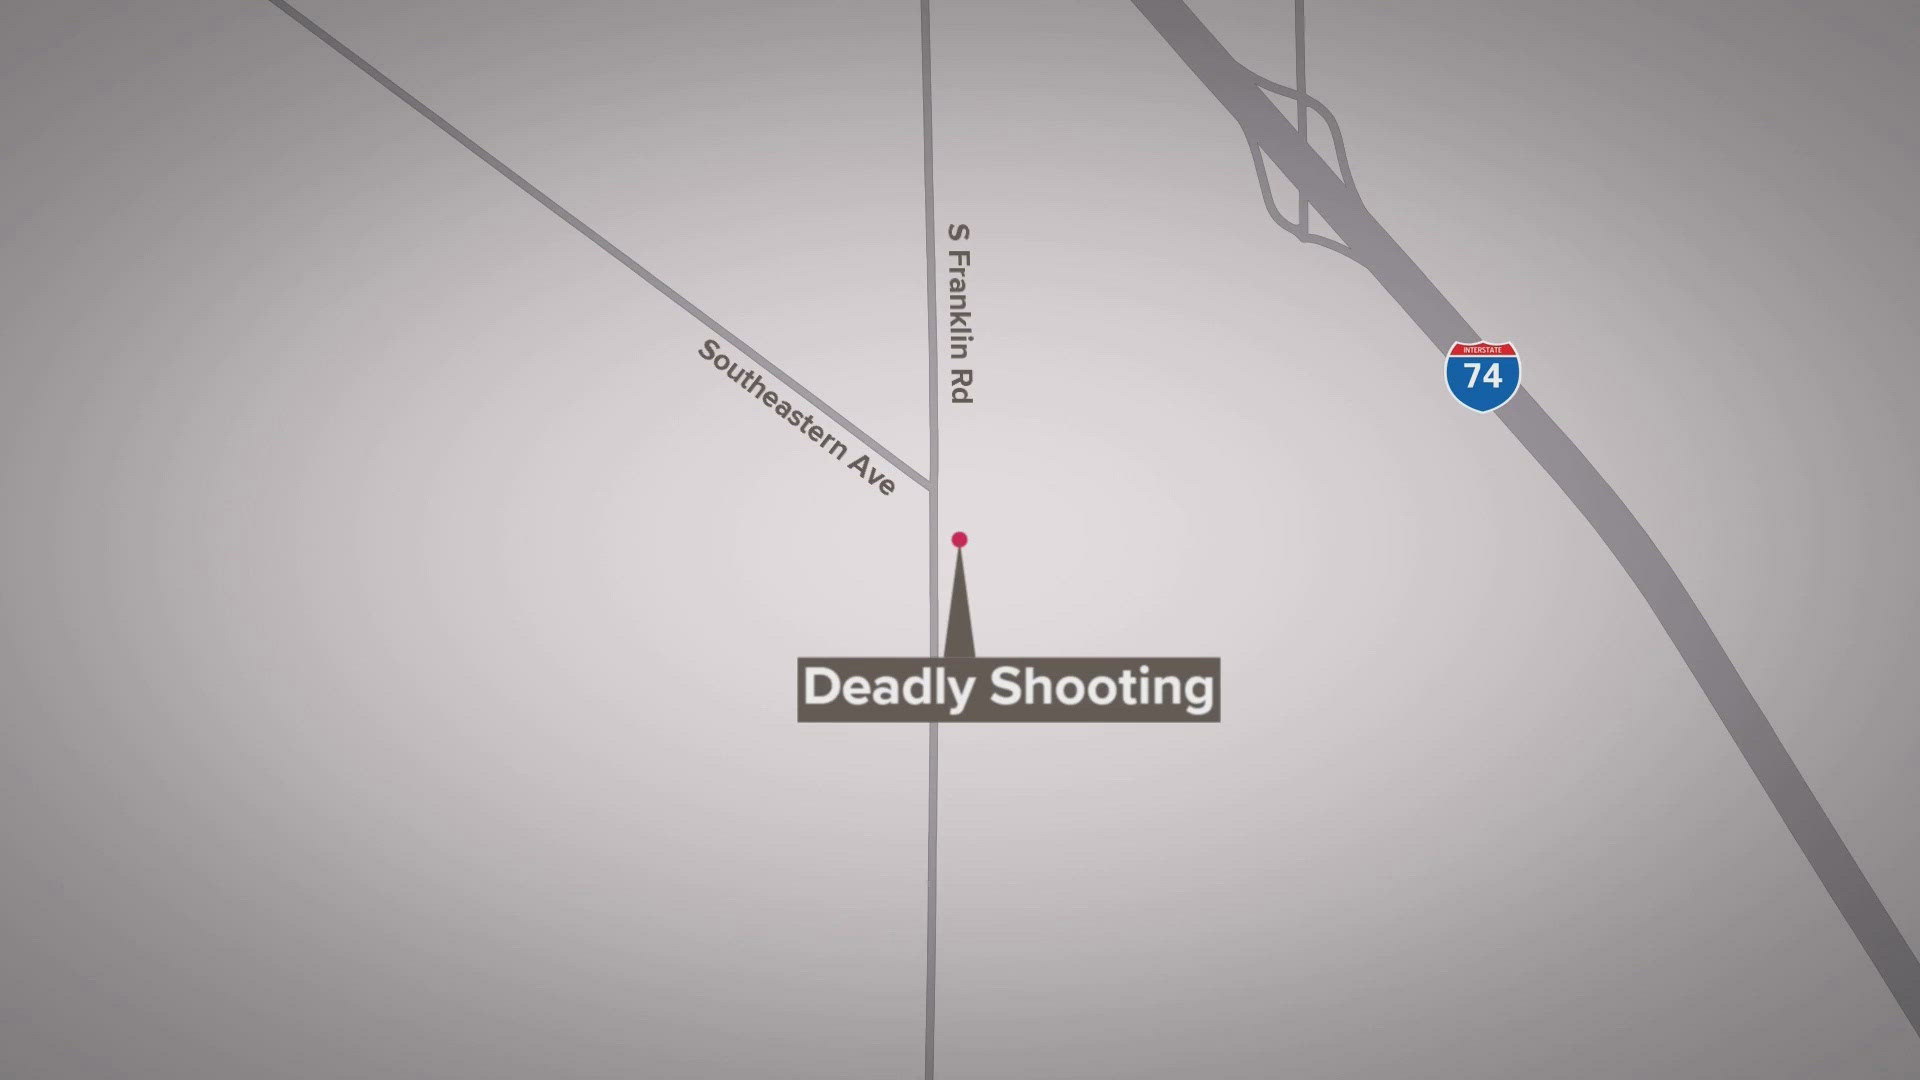 Police said the shooting happened near Arlington and Southeastern Avenue around 5:30 p.m. Thursday.